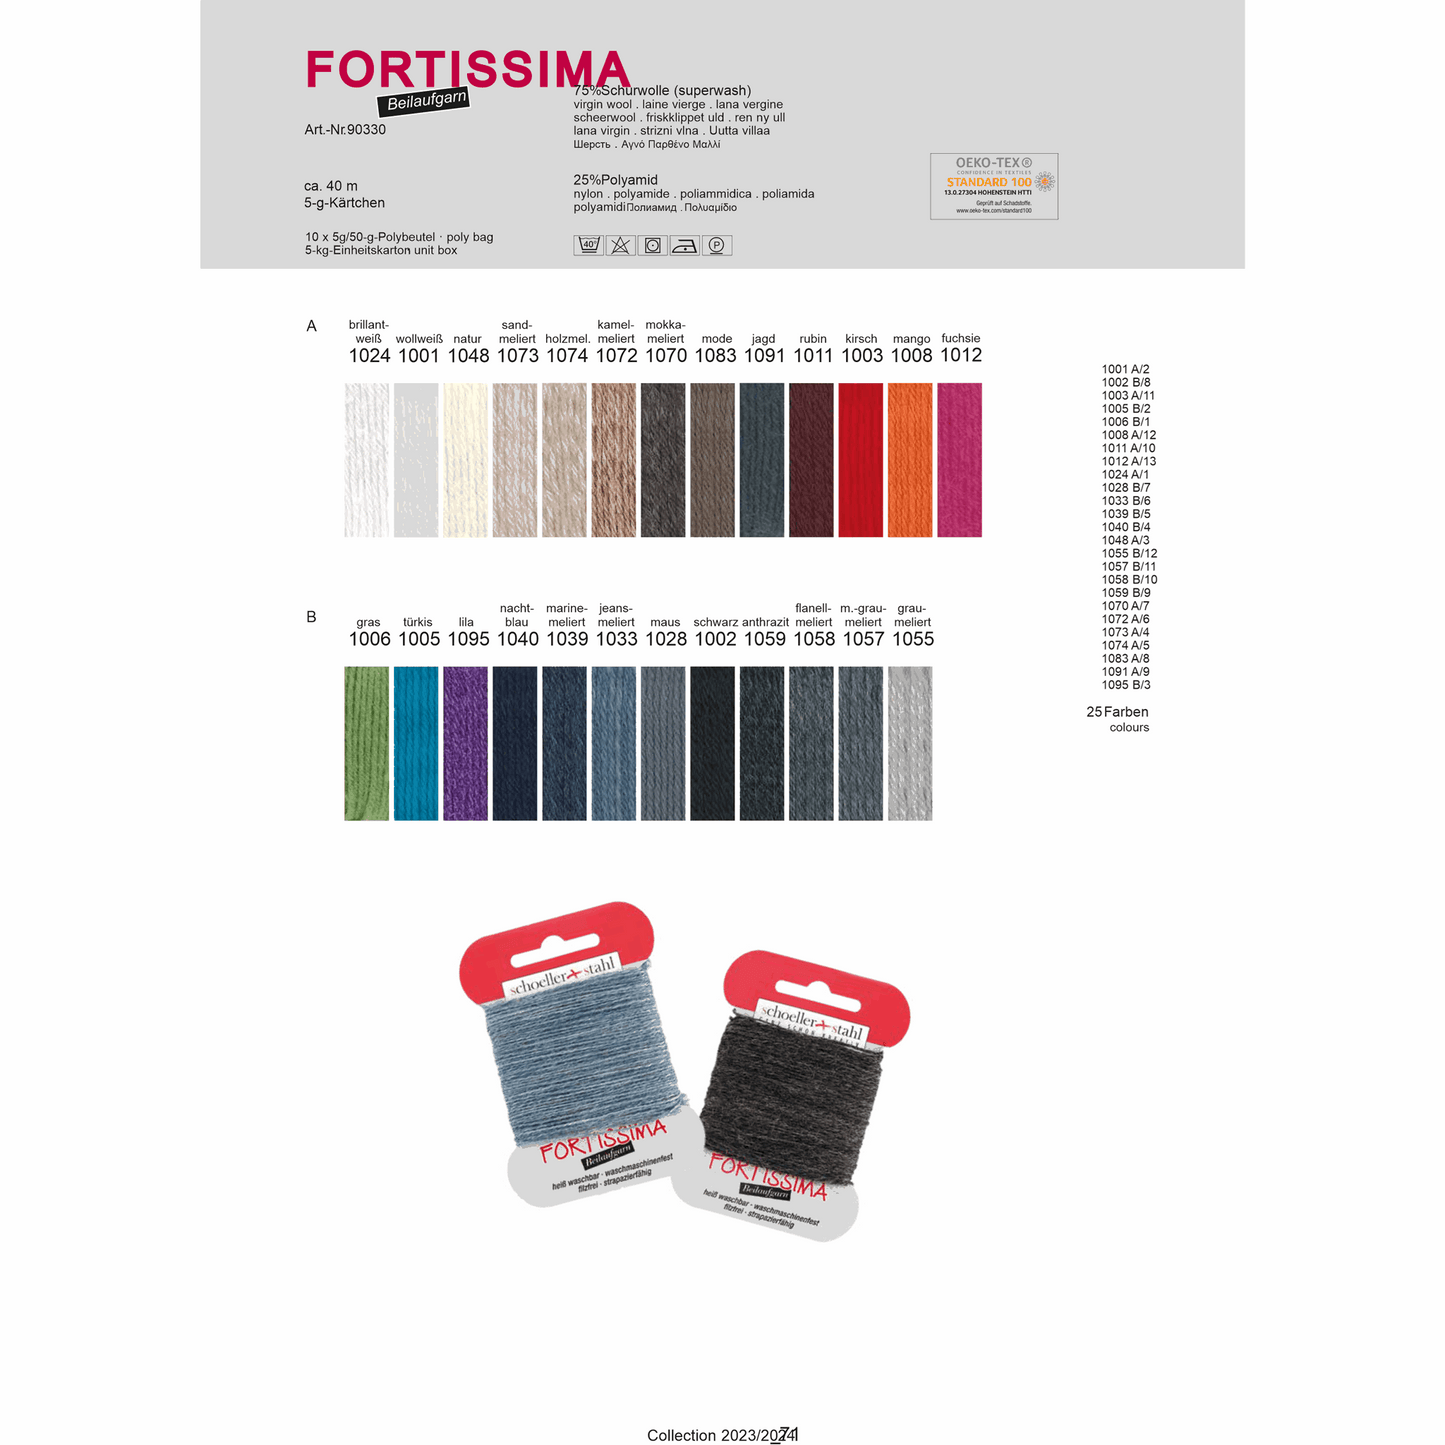 Fortissima thread 5g, 90330, color 1074, mottled wood